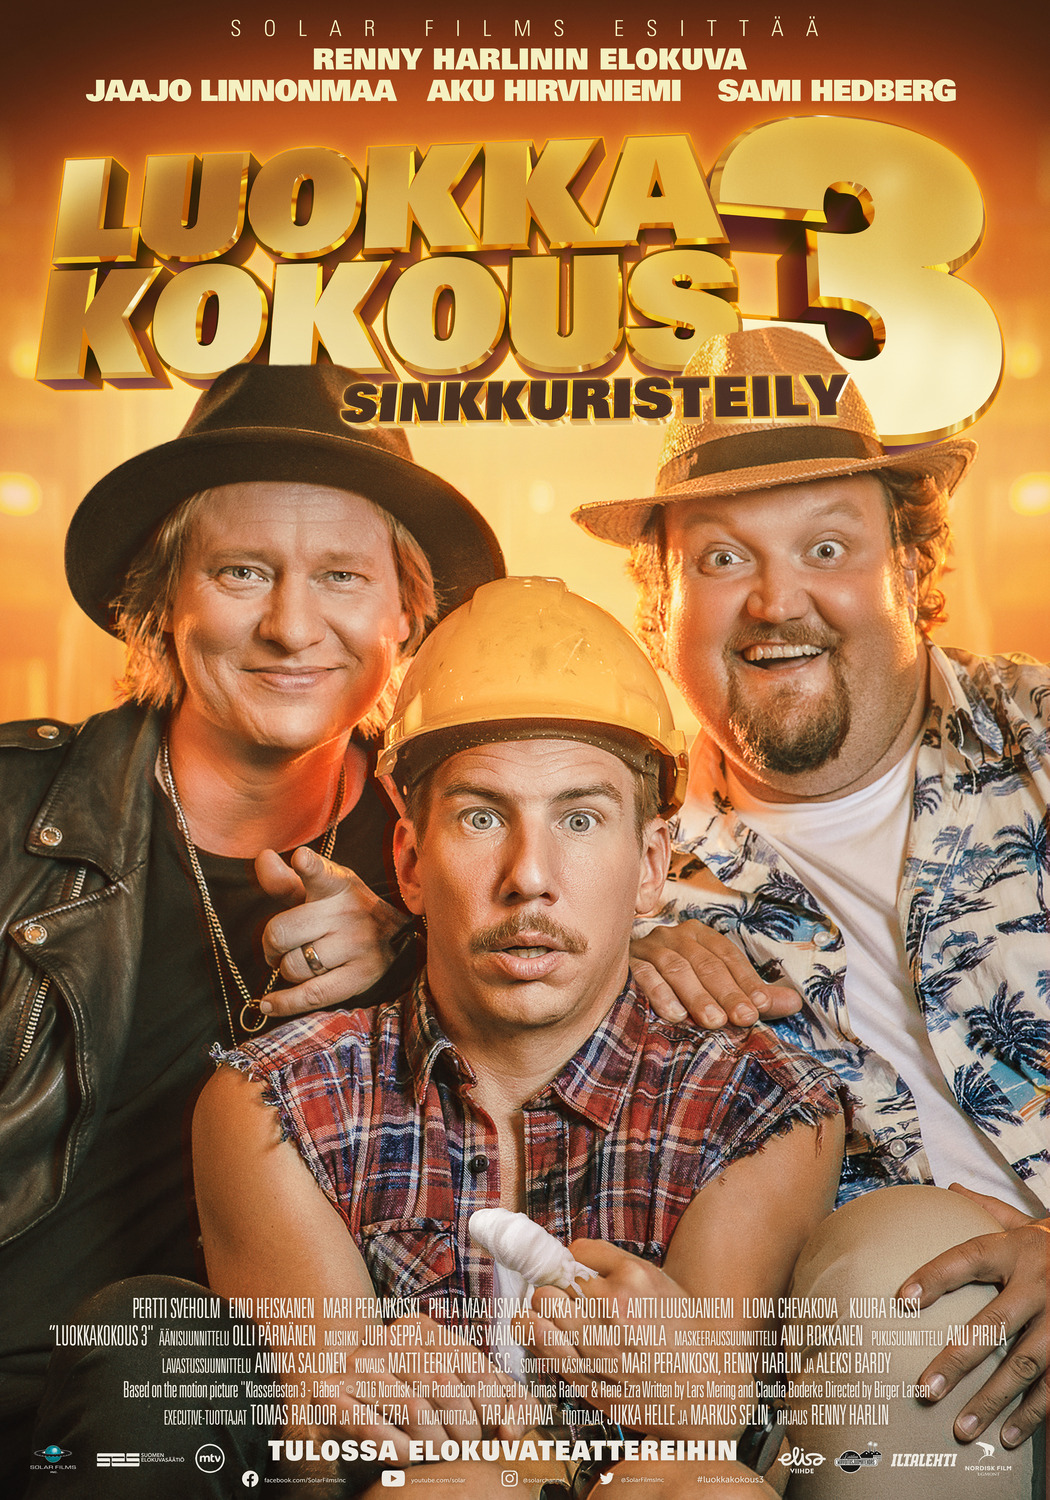 Extra Large Movie Poster Image for Luokkakokous 3 